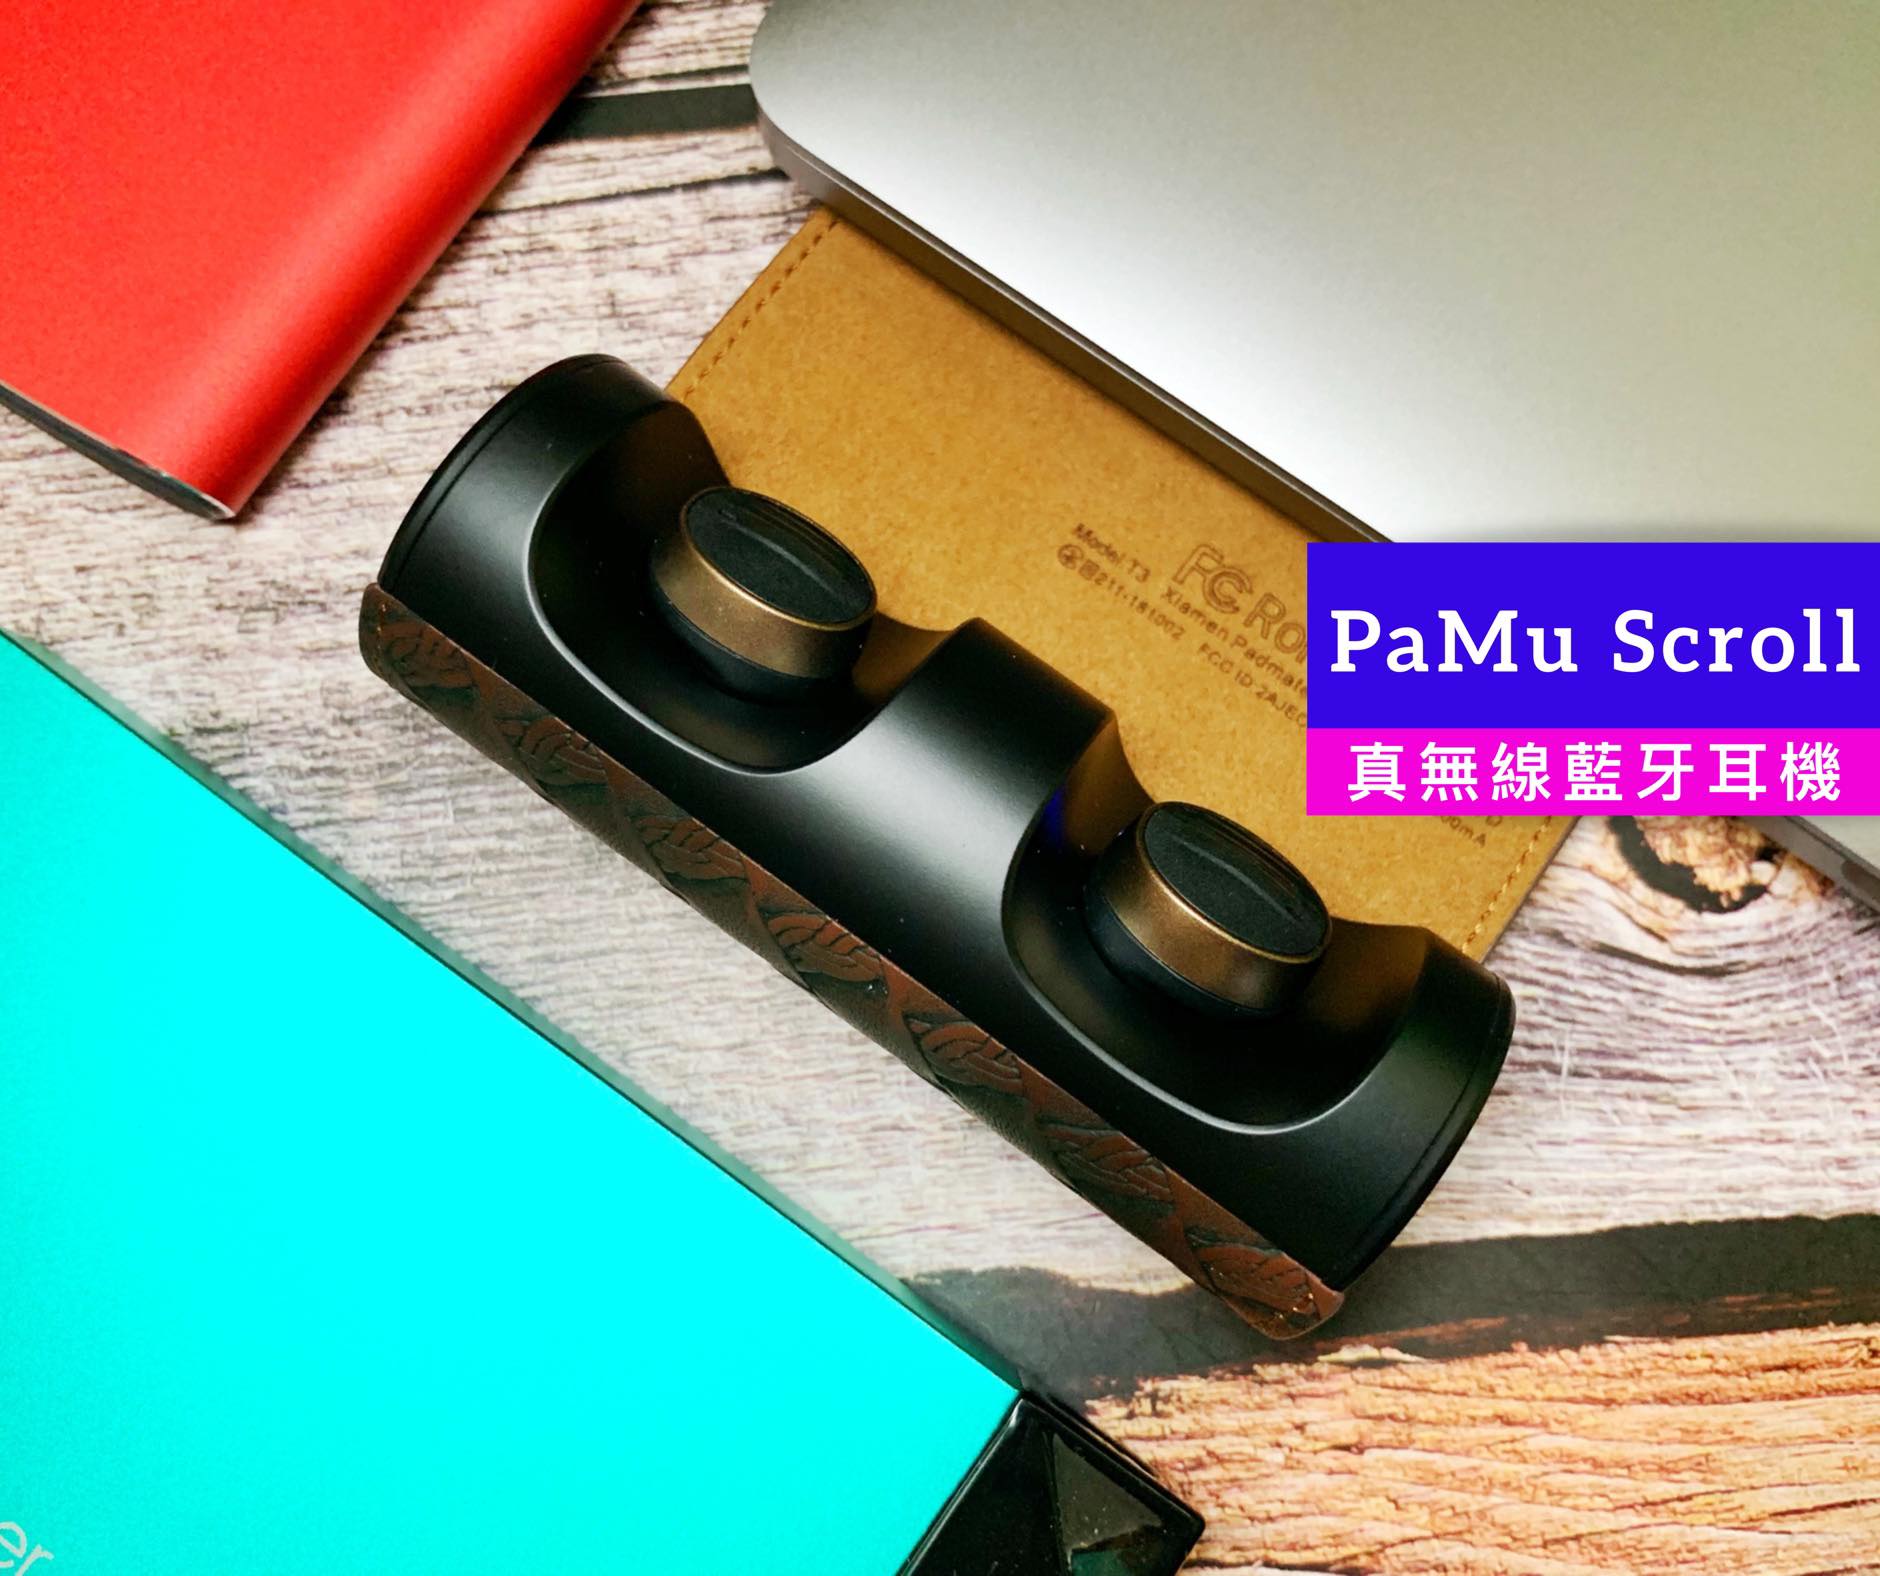 PaMu Scroll 真無線藍牙耳機 - 超低藍牙延遲與獨特外型，創下破億募資金額的藍牙耳機 - 真無線藍牙耳機 - 科技生活 - teXch